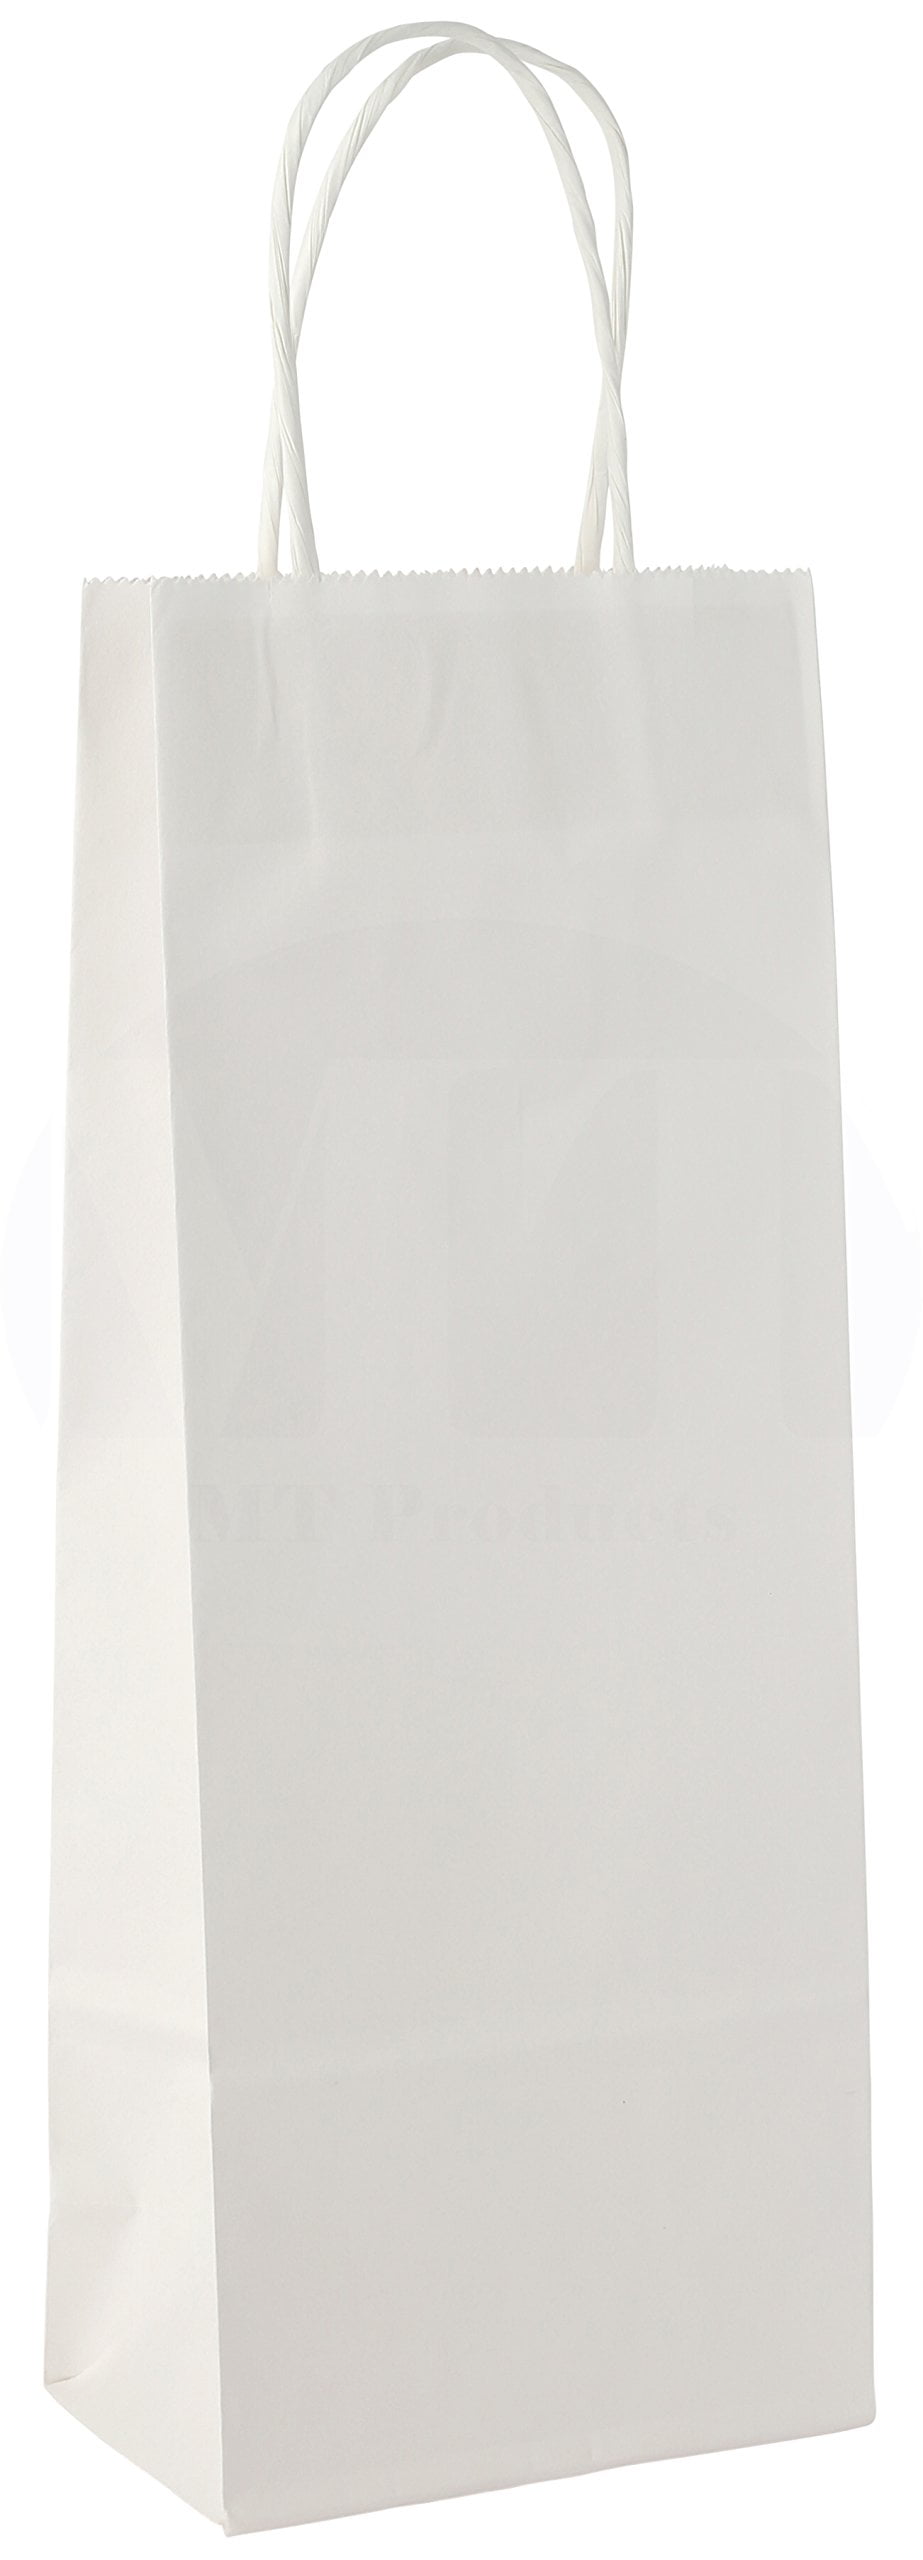 BagDream Kraft Paper Bags 5.25x3.25x13 Inches 50Pcs Wine Bags Paper Gift Bags Kraft Bags Retail Bags Party Bags White Paper Wine Bags with Handles Bulk 